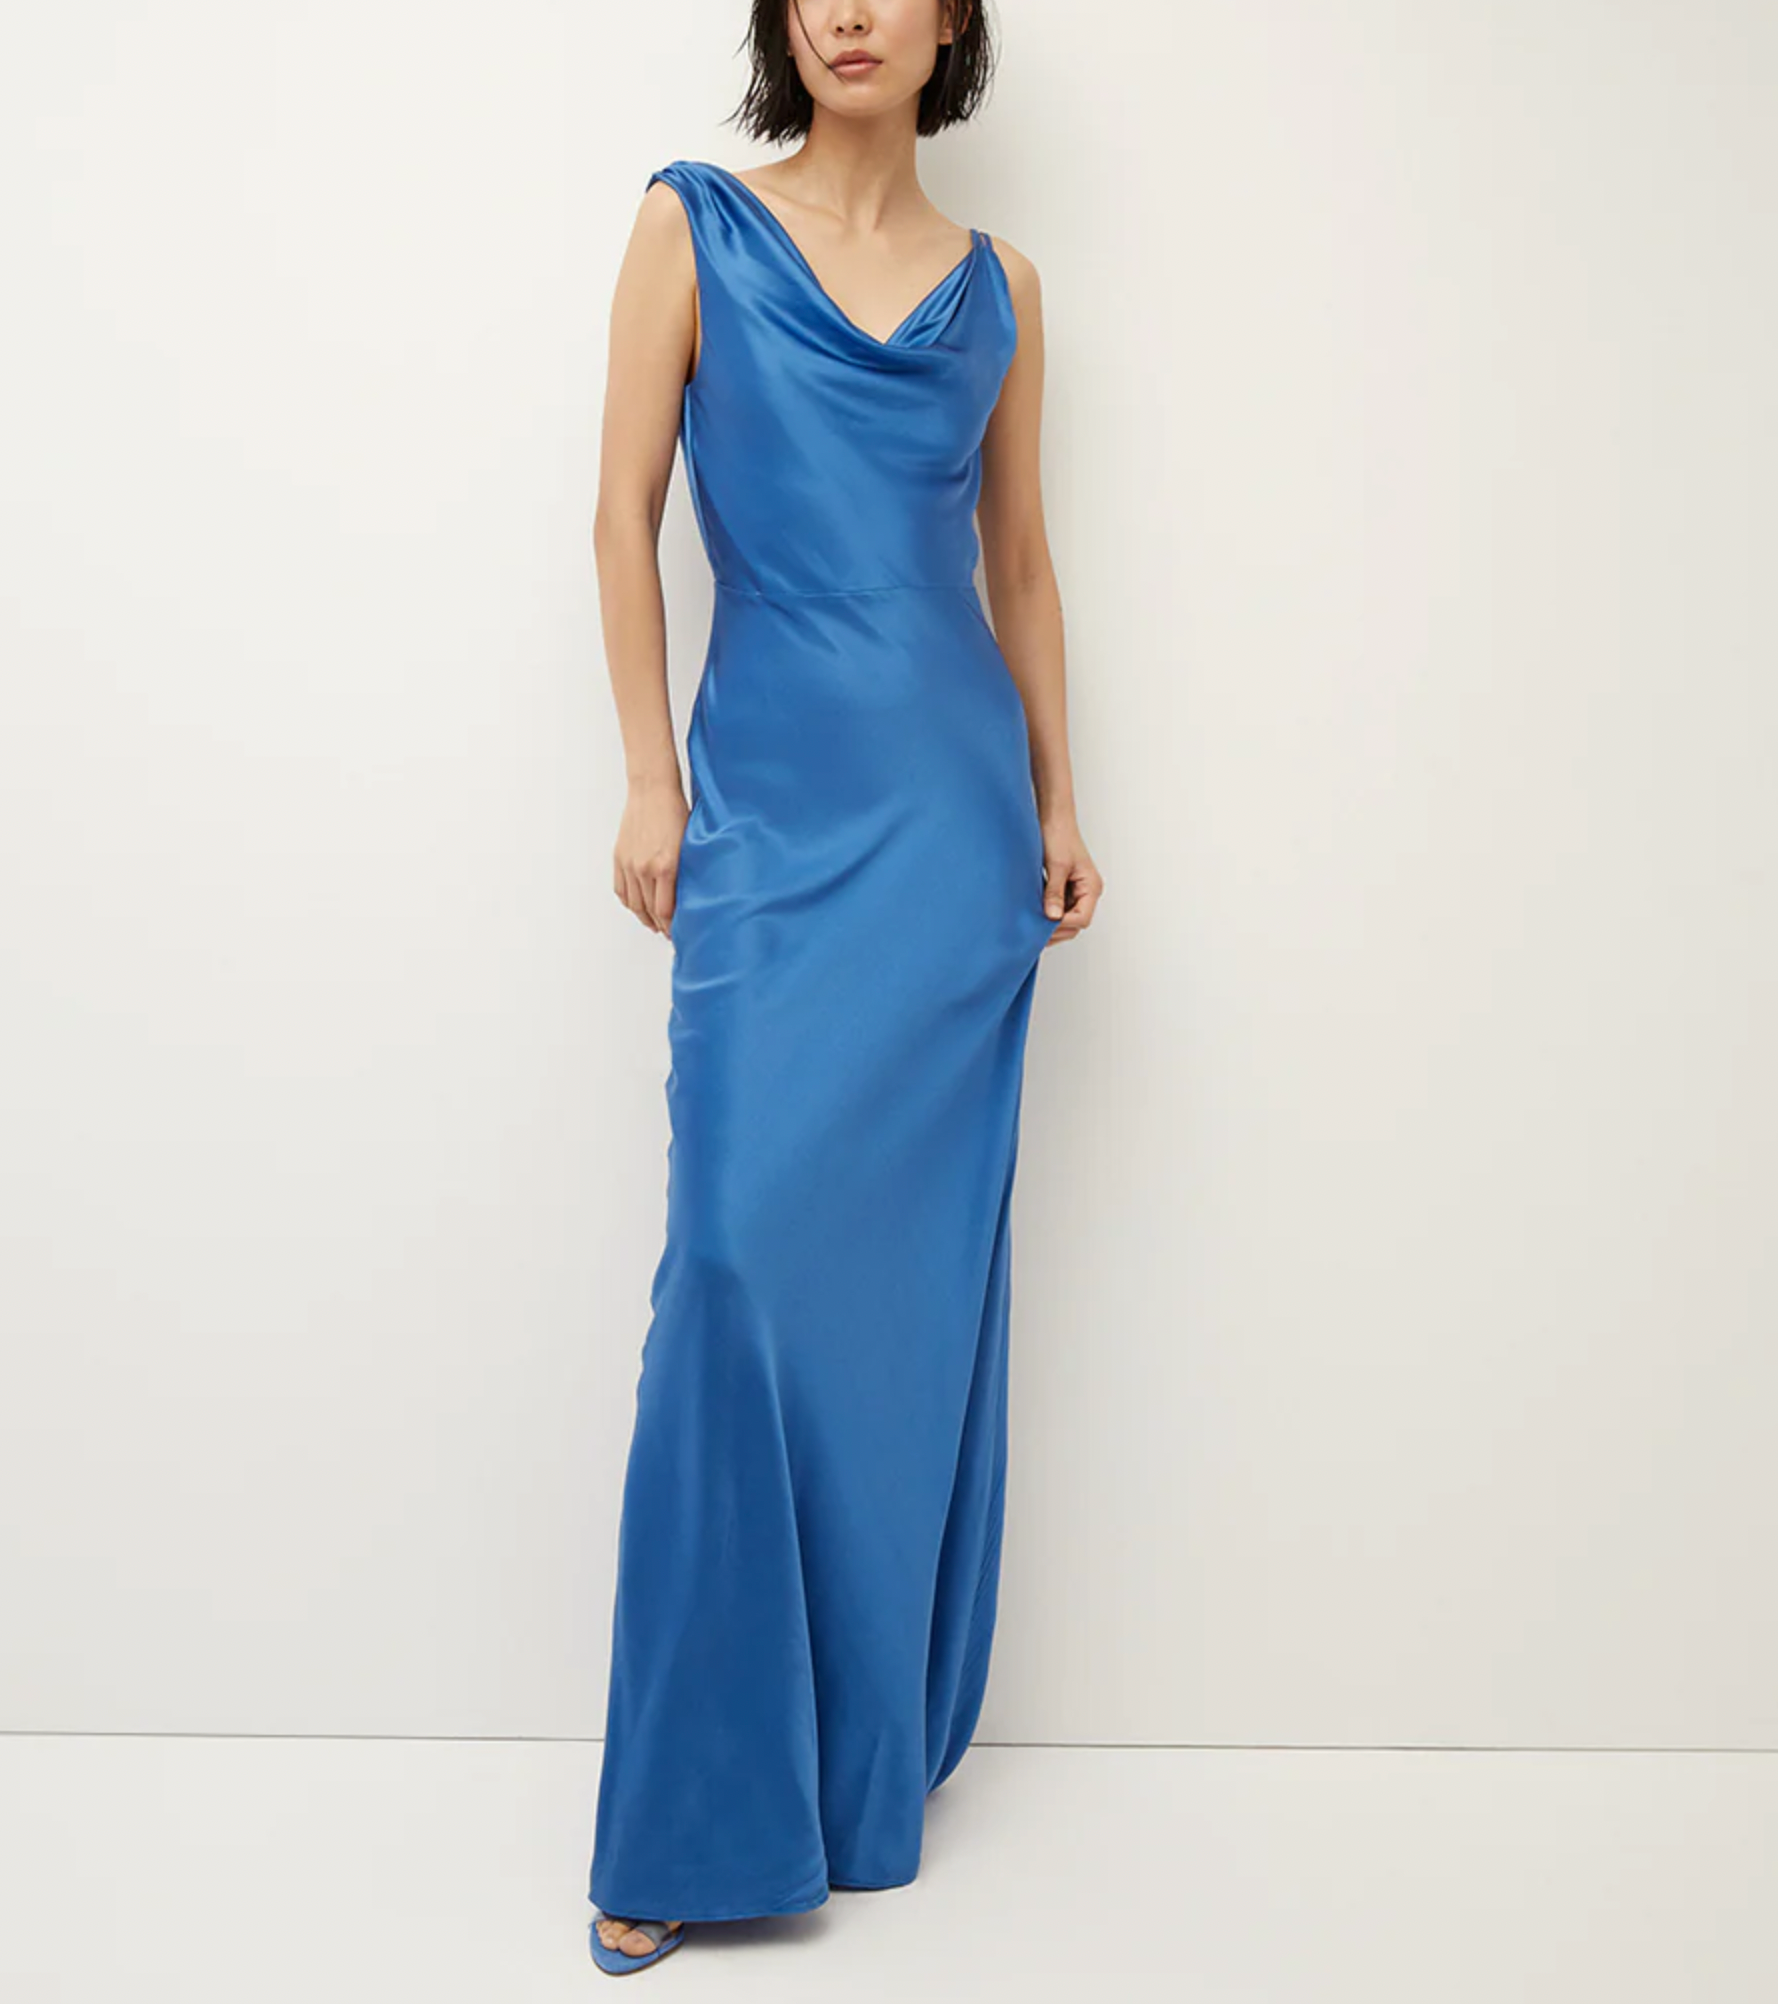 Sanderson Dress - Azure Blue